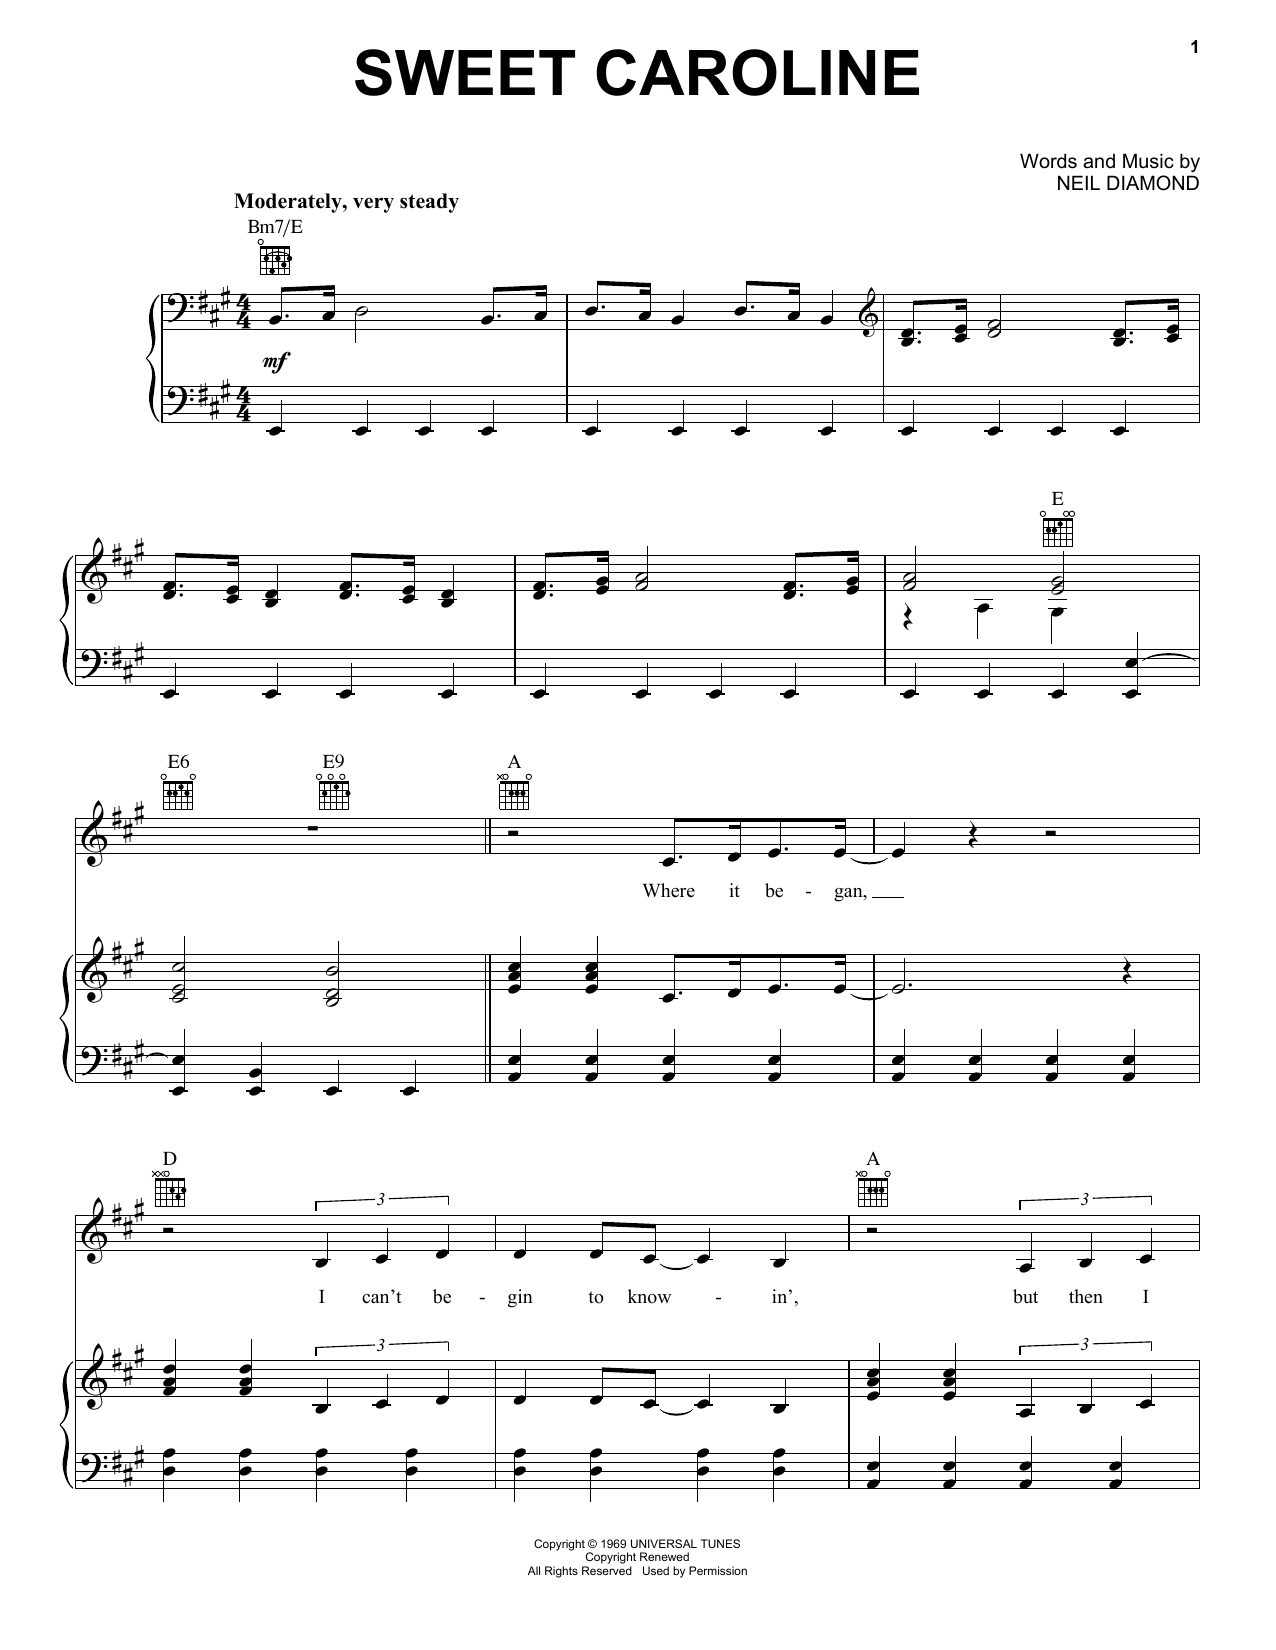 Neil Diamond Sweet Caroline Sheet Music Notes & Chords for Ukulele with strumming patterns - Download or Print PDF